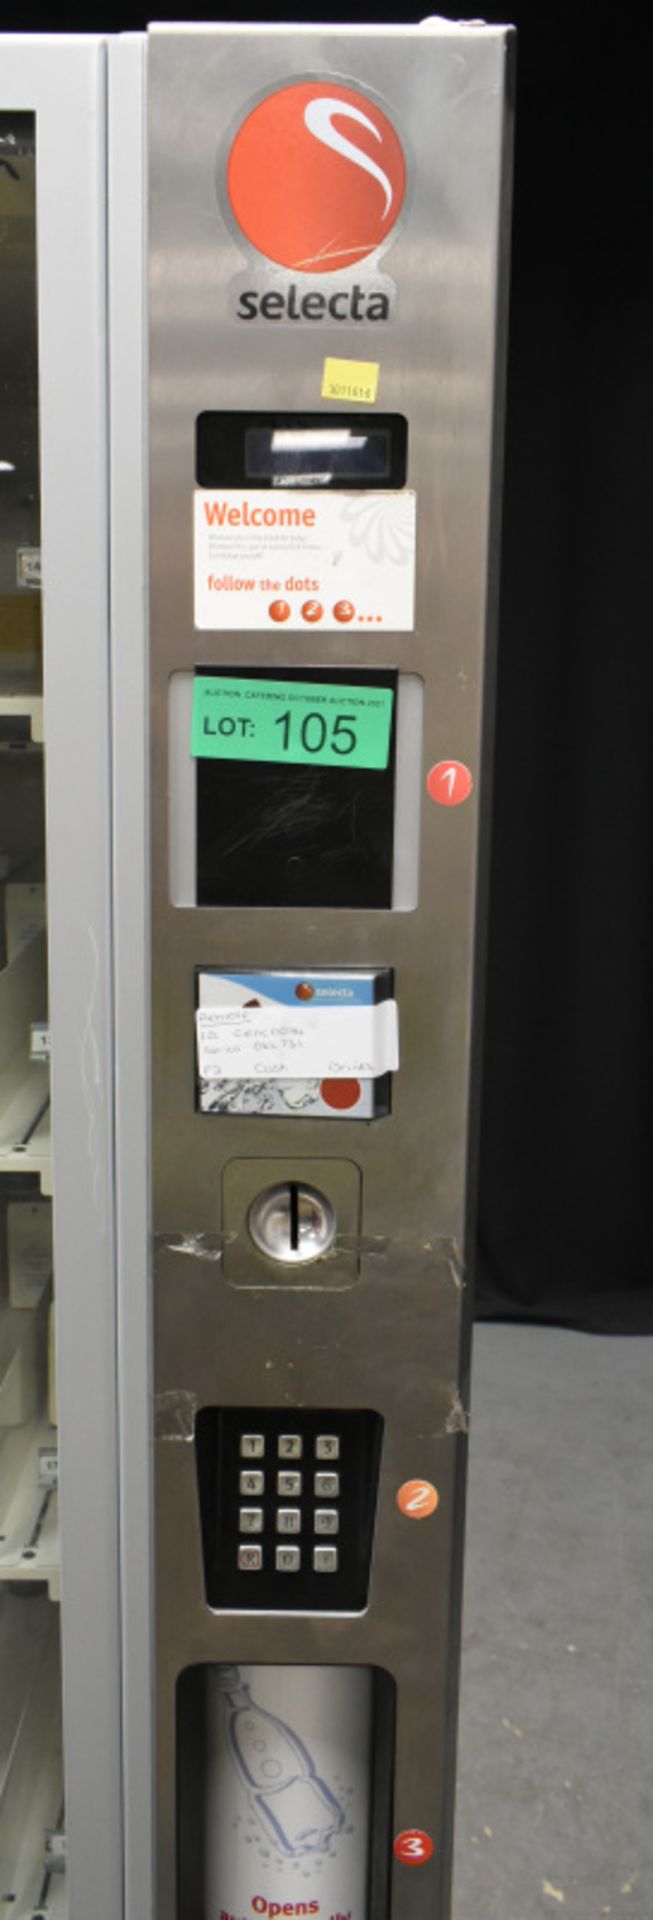 Sielaff Selecta Cash Vending Machine - Serial No.90357298 - L750mm x W885mm x H1830mm - PL - Image 2 of 10